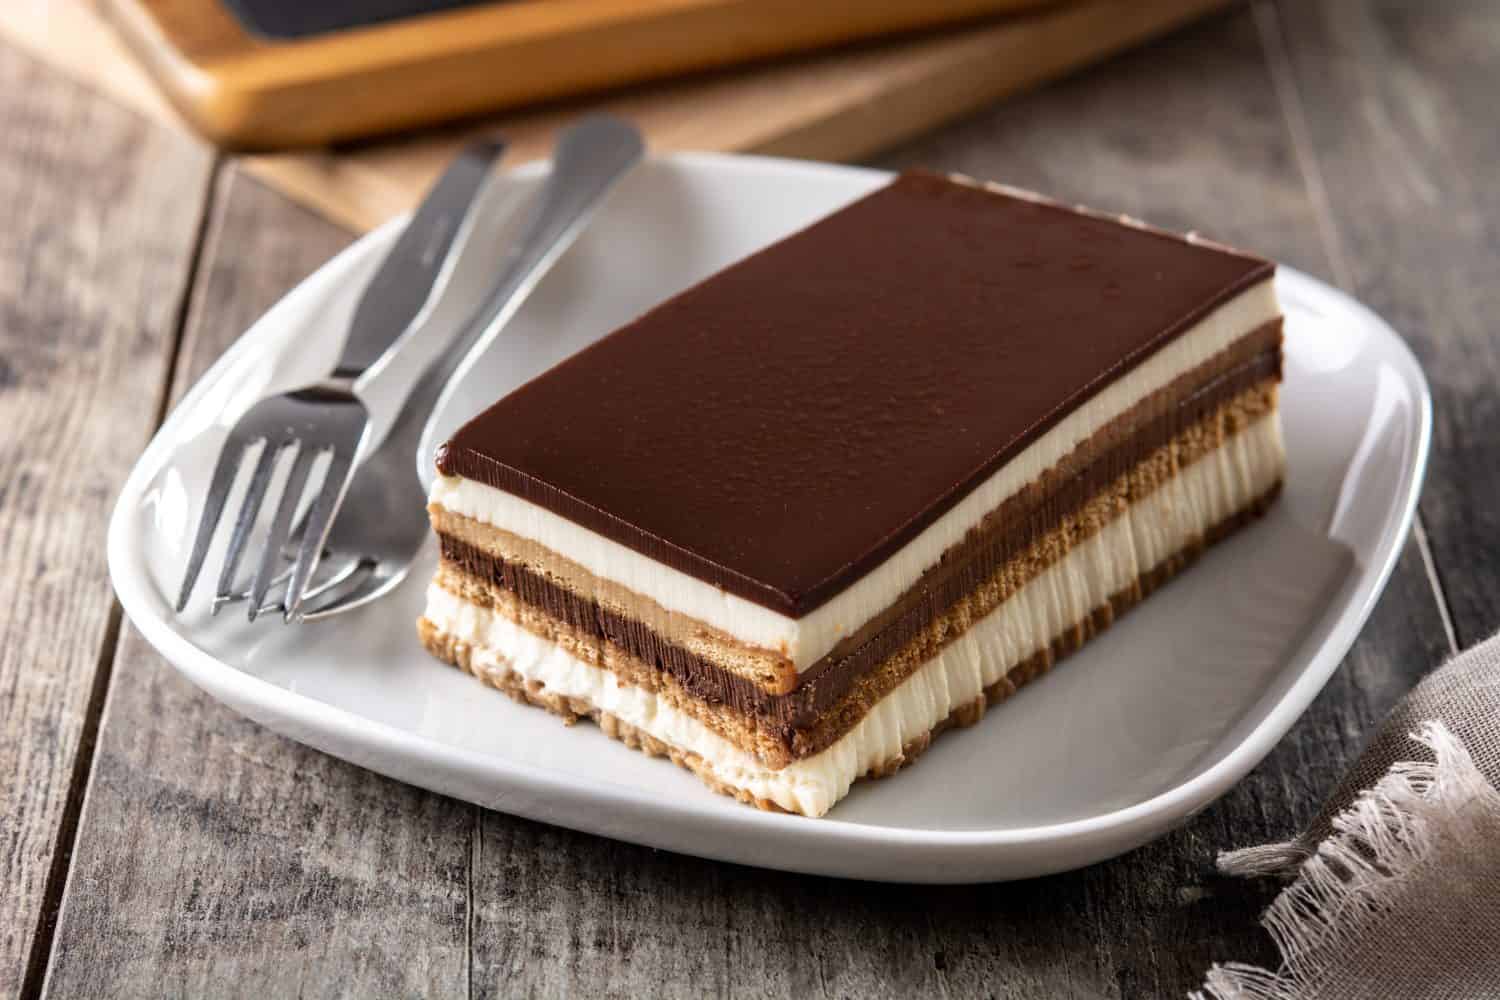 Opera cake dessert slice on wooden table